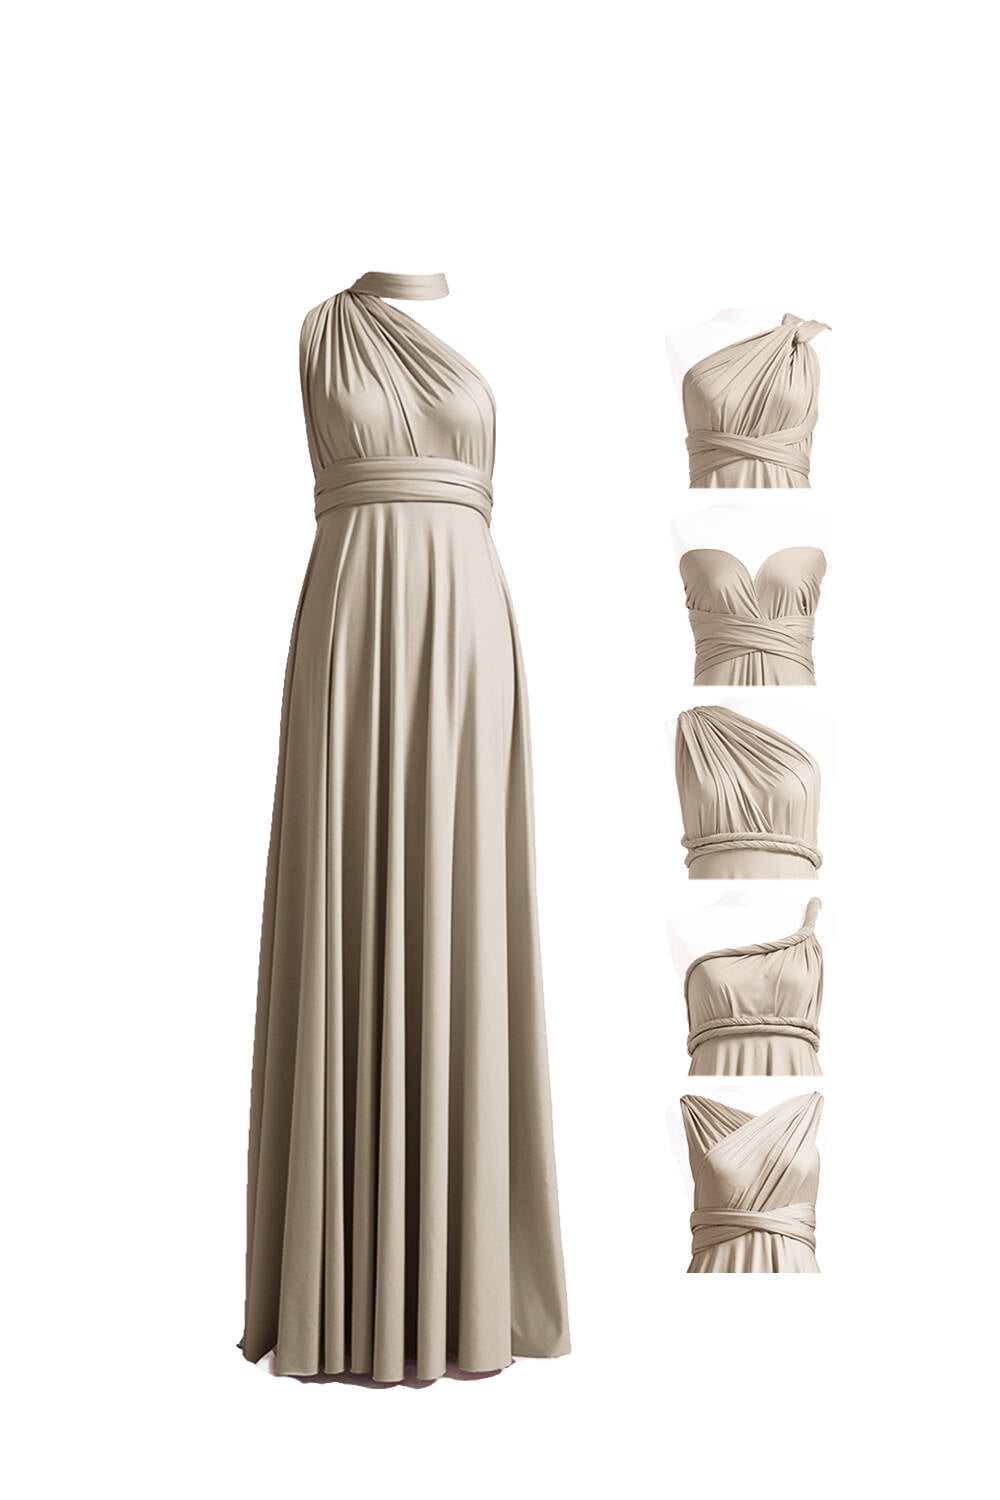 72Styles Infinity Dress with Bandeau, Convertible Bridesmaid Dress, Long,  Multi-Way Dress, Twist Wrap Dress 